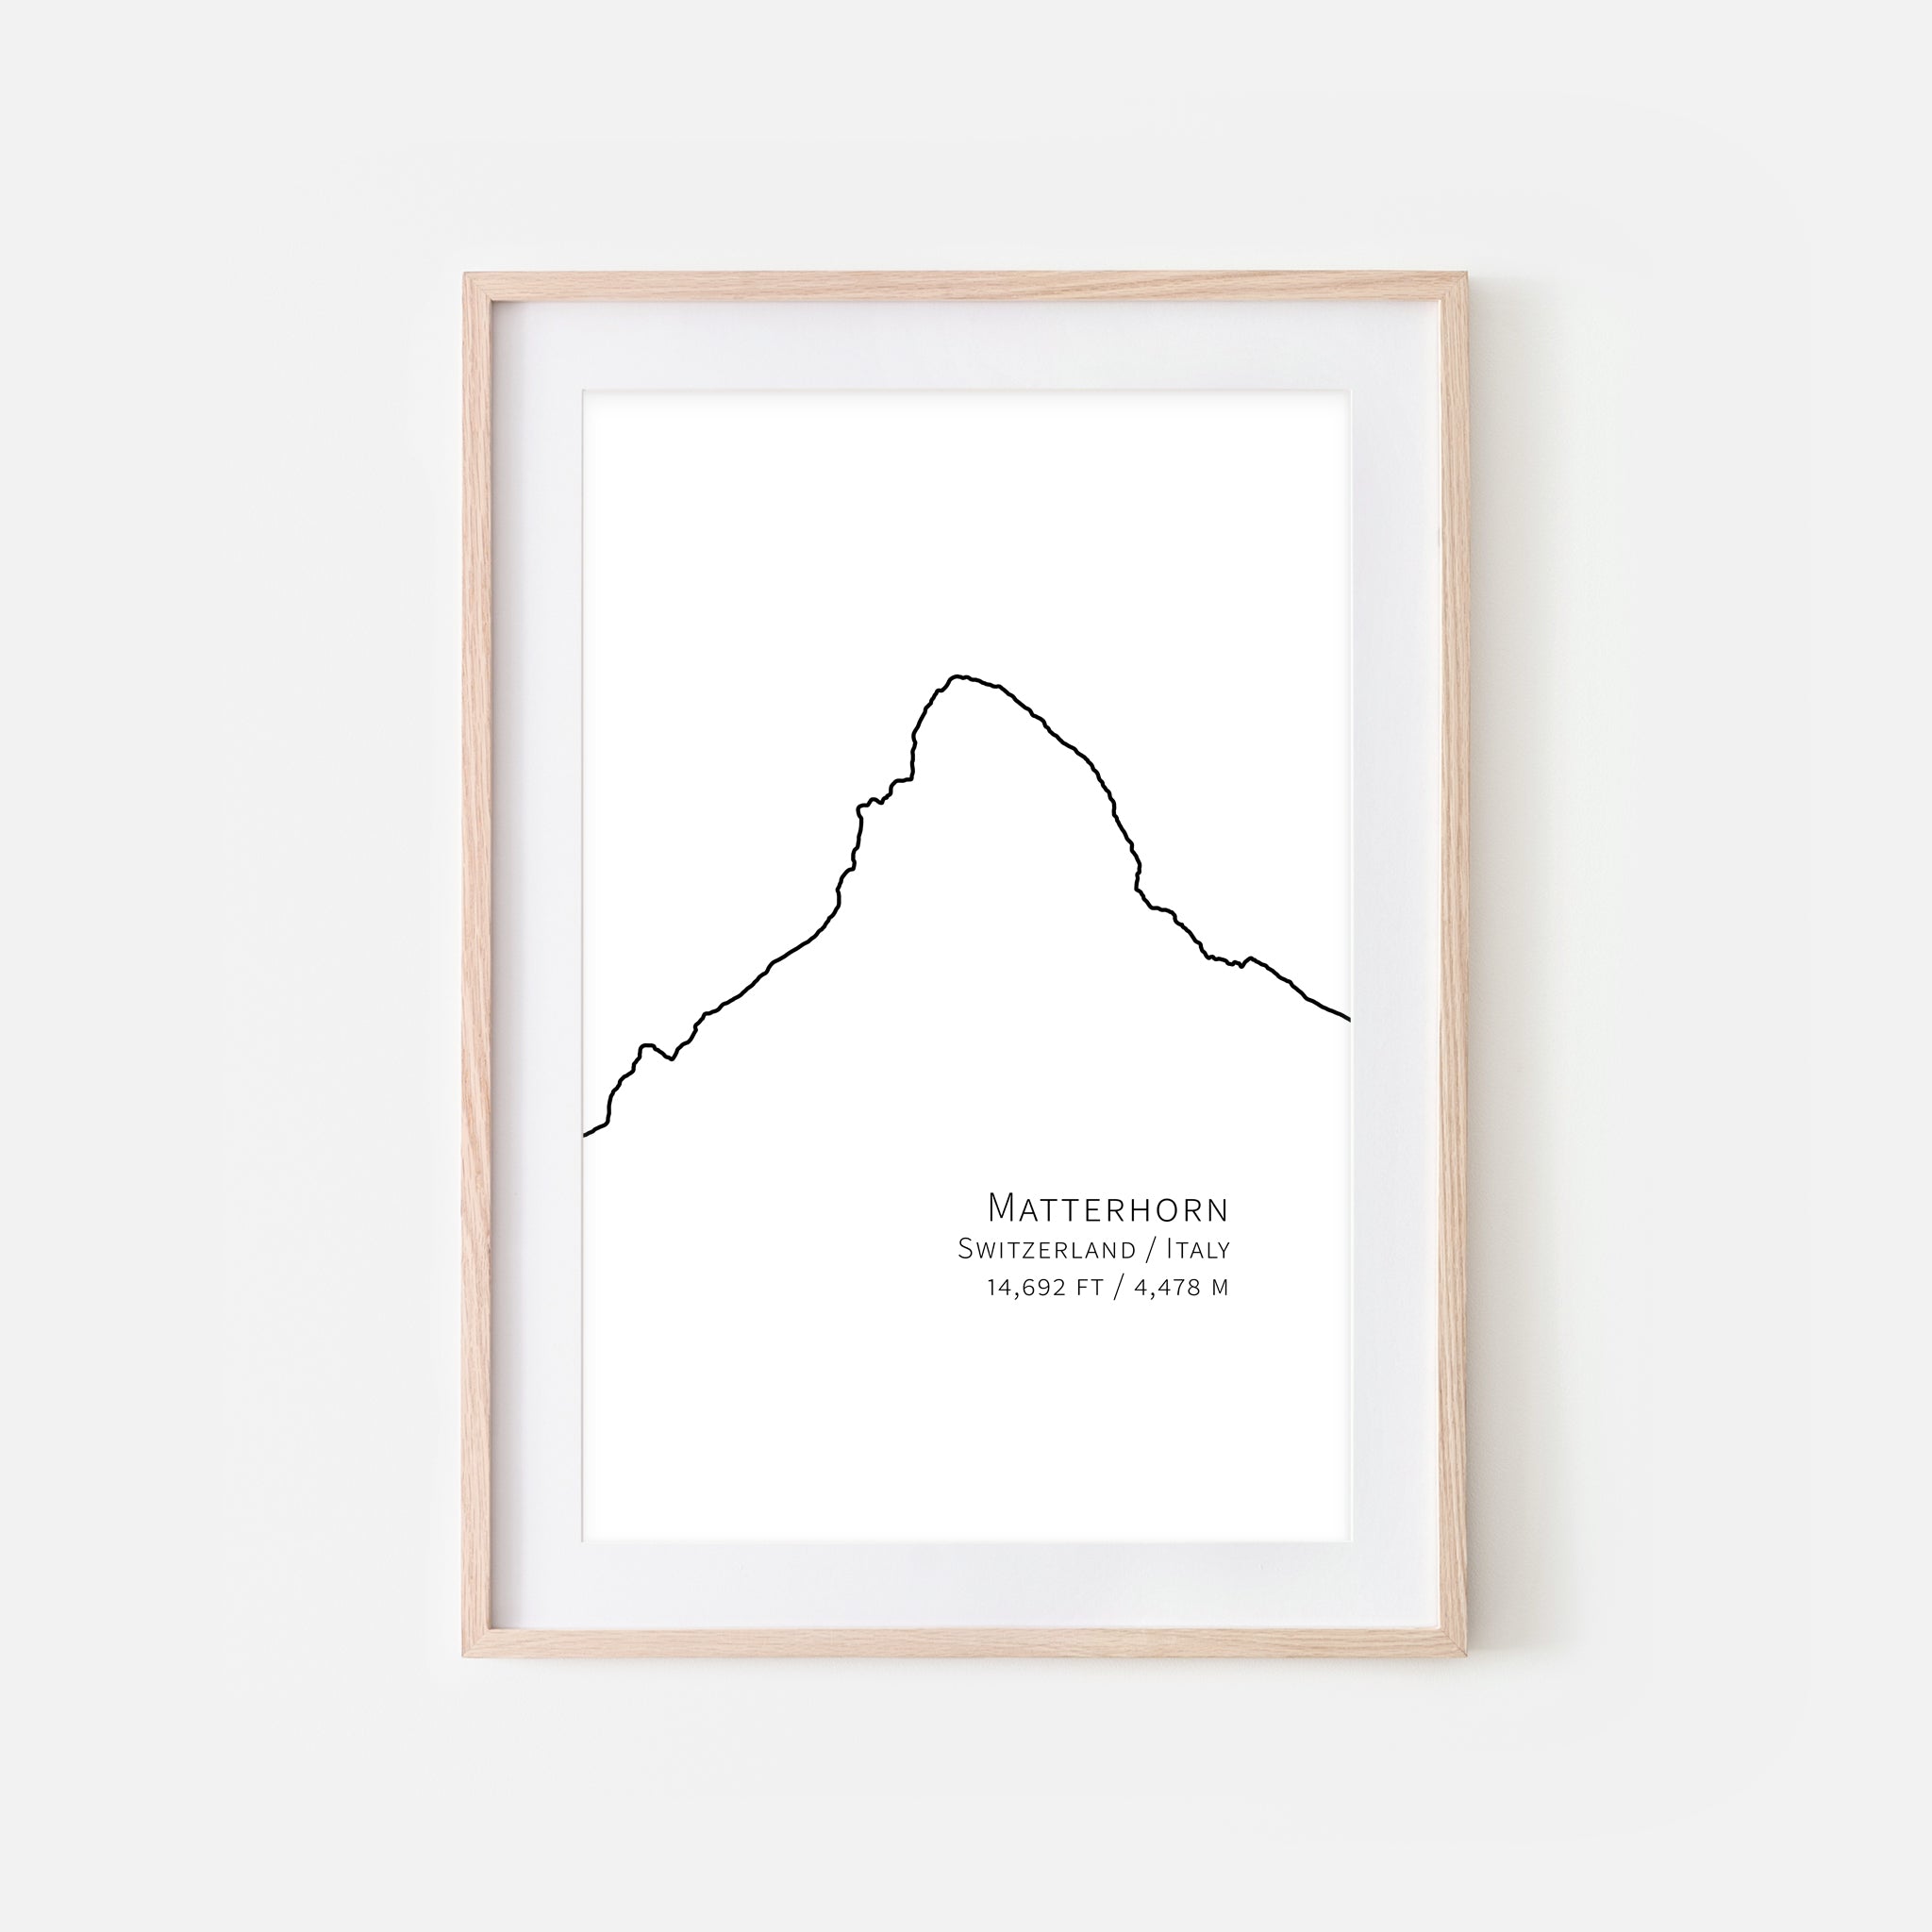 Matterhorn Mountain Wall Print Printable Black White Line Art Happycatprints